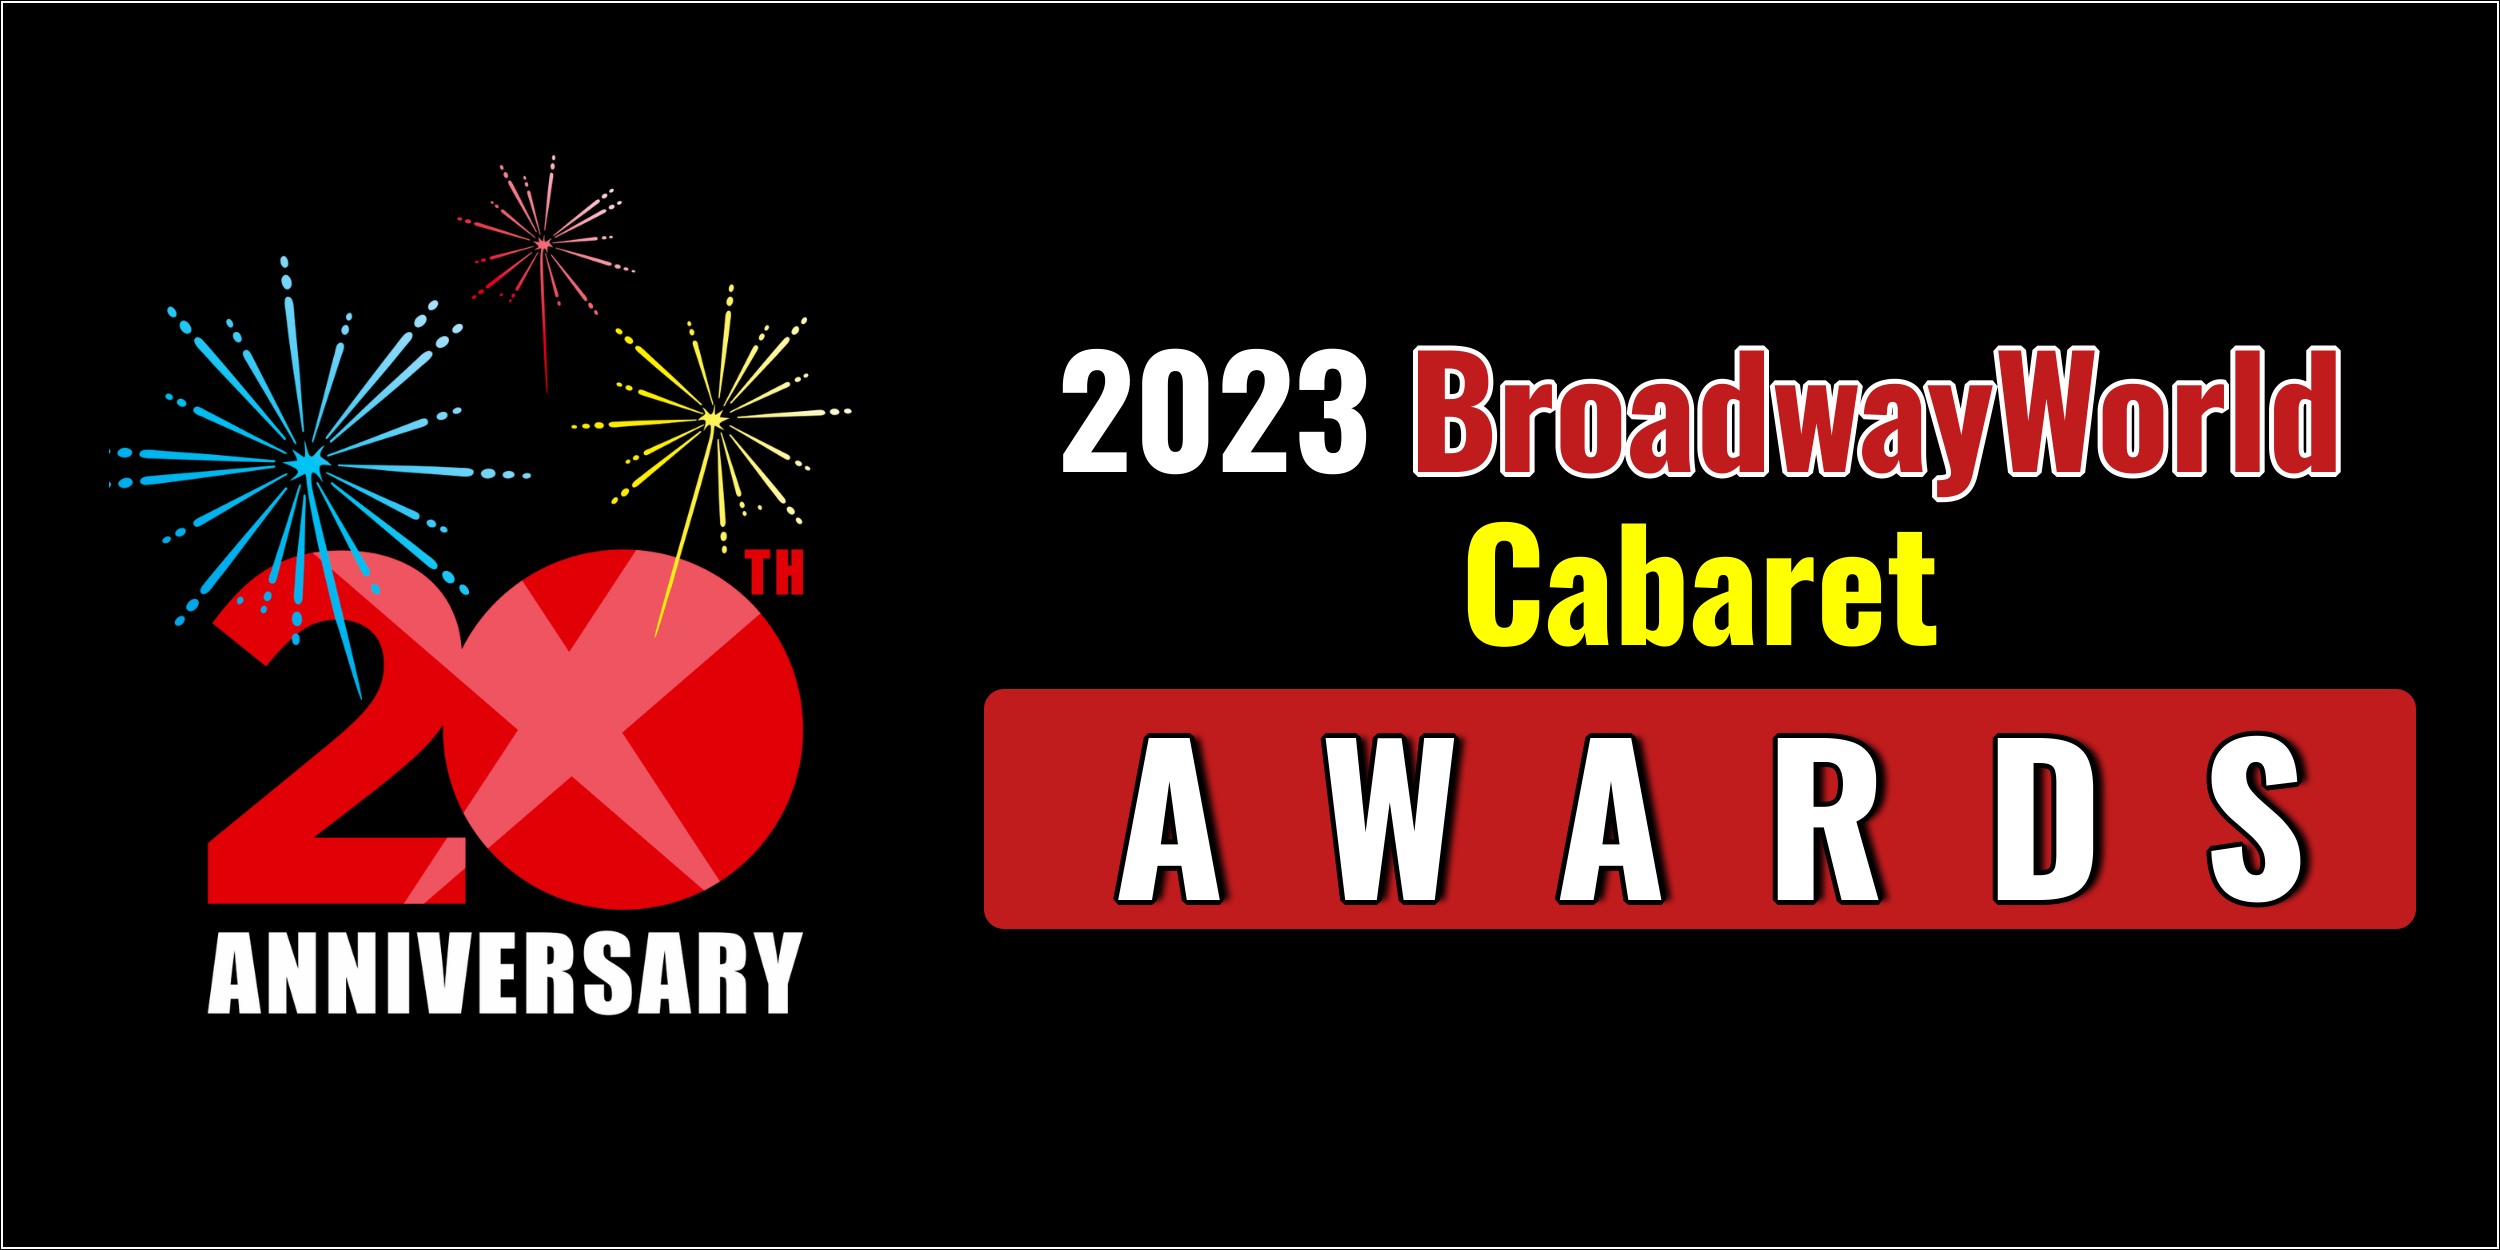 BroadwayWorld Cabaret Awards December 5th Standings;  Leads Favorite Local Theatre! 